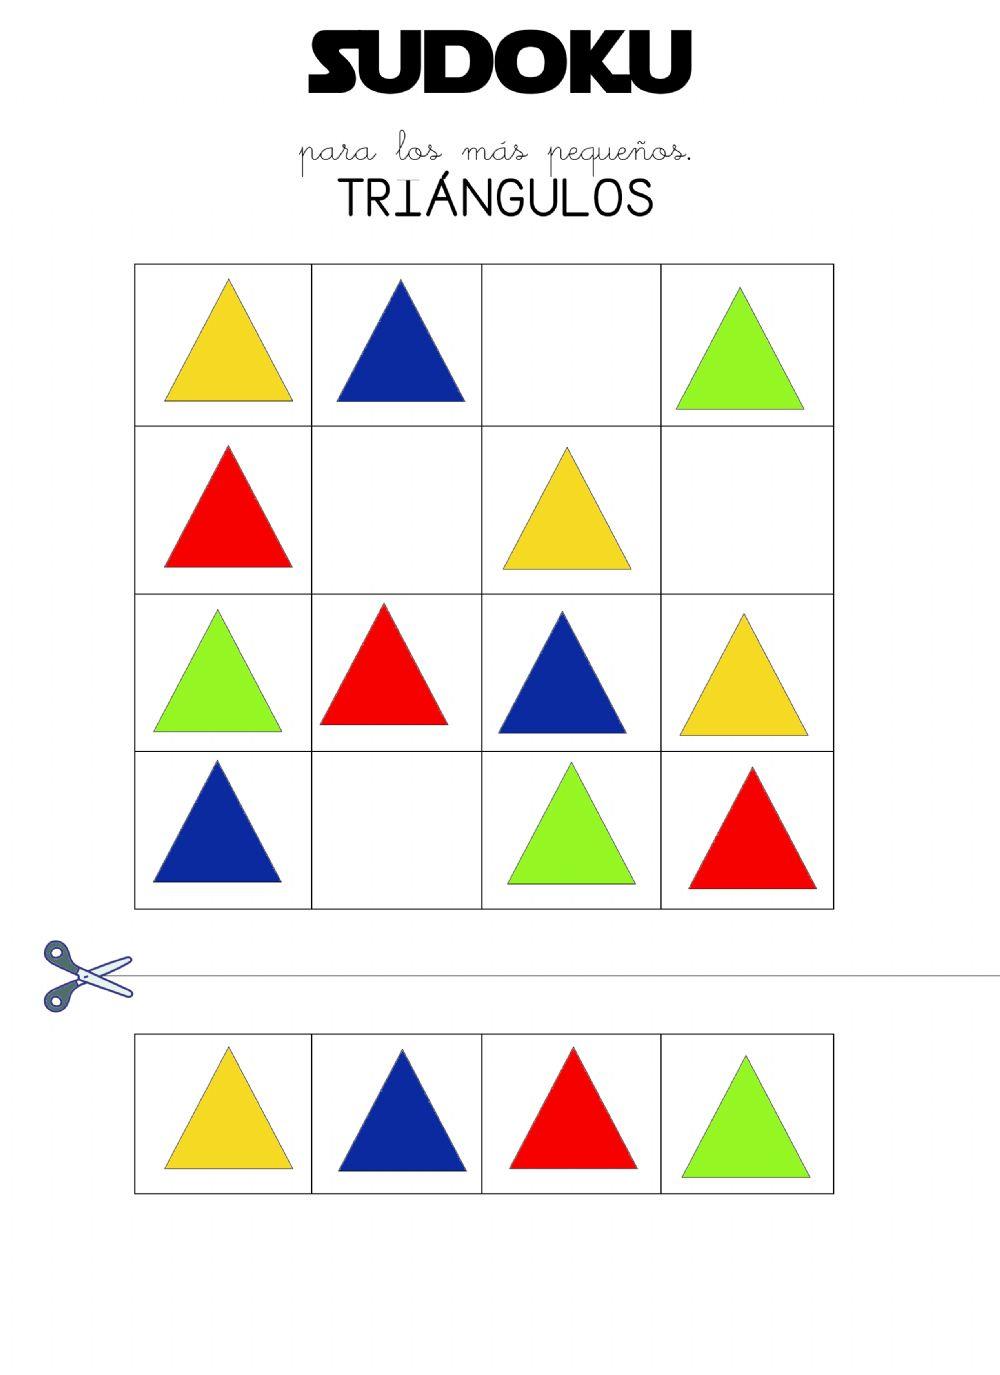 Sudoku triángulos